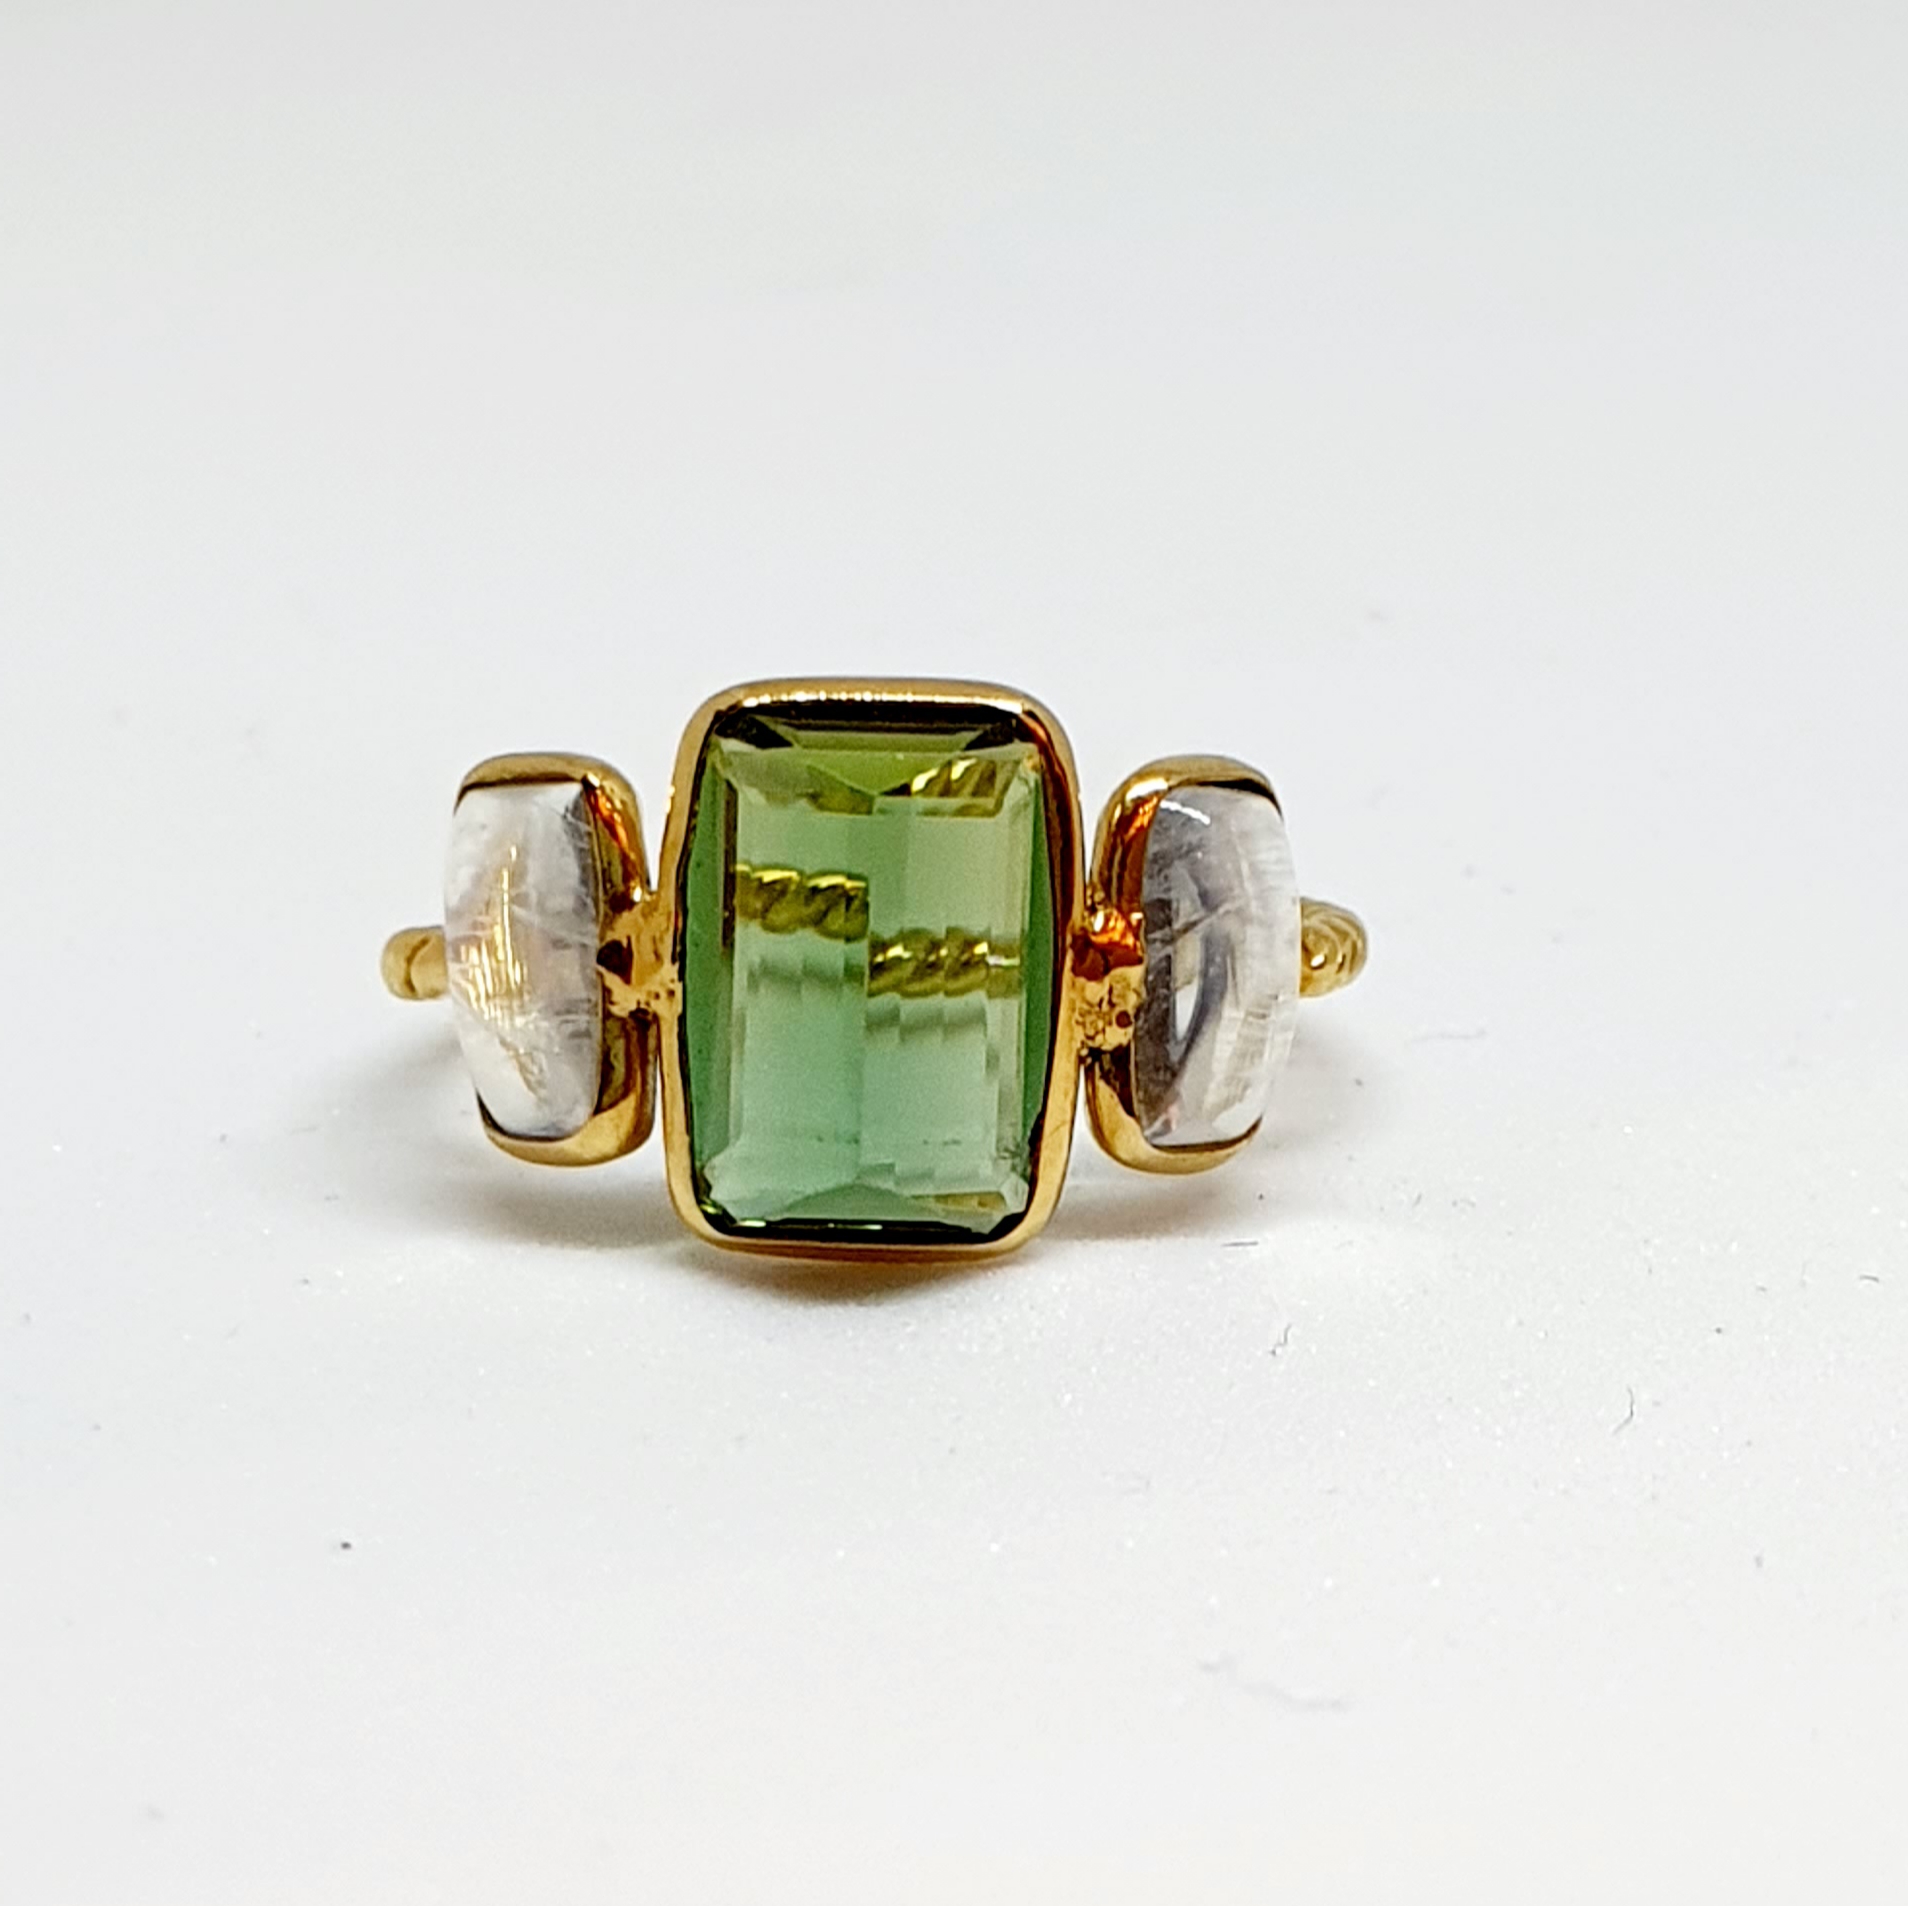 10.33 carat Elongated Green Tourmaline Ring w/ Diamonds in Platinum -  HM2431SE | eBay